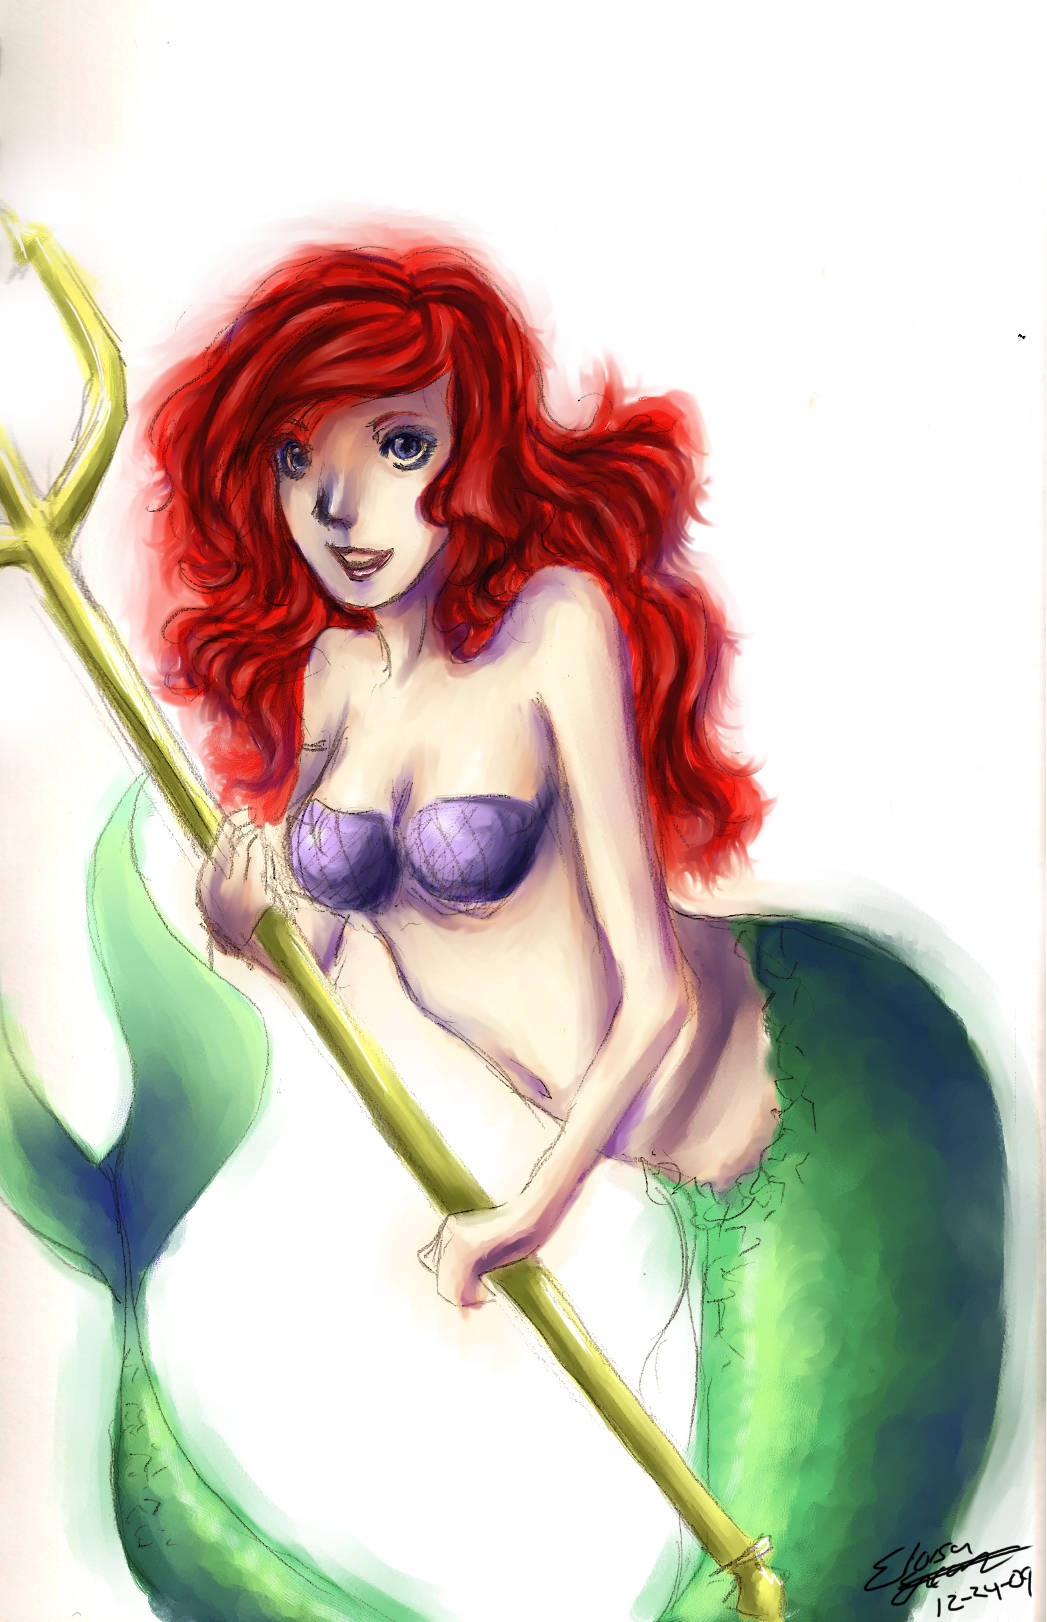 Ariel-The Little Mermaid